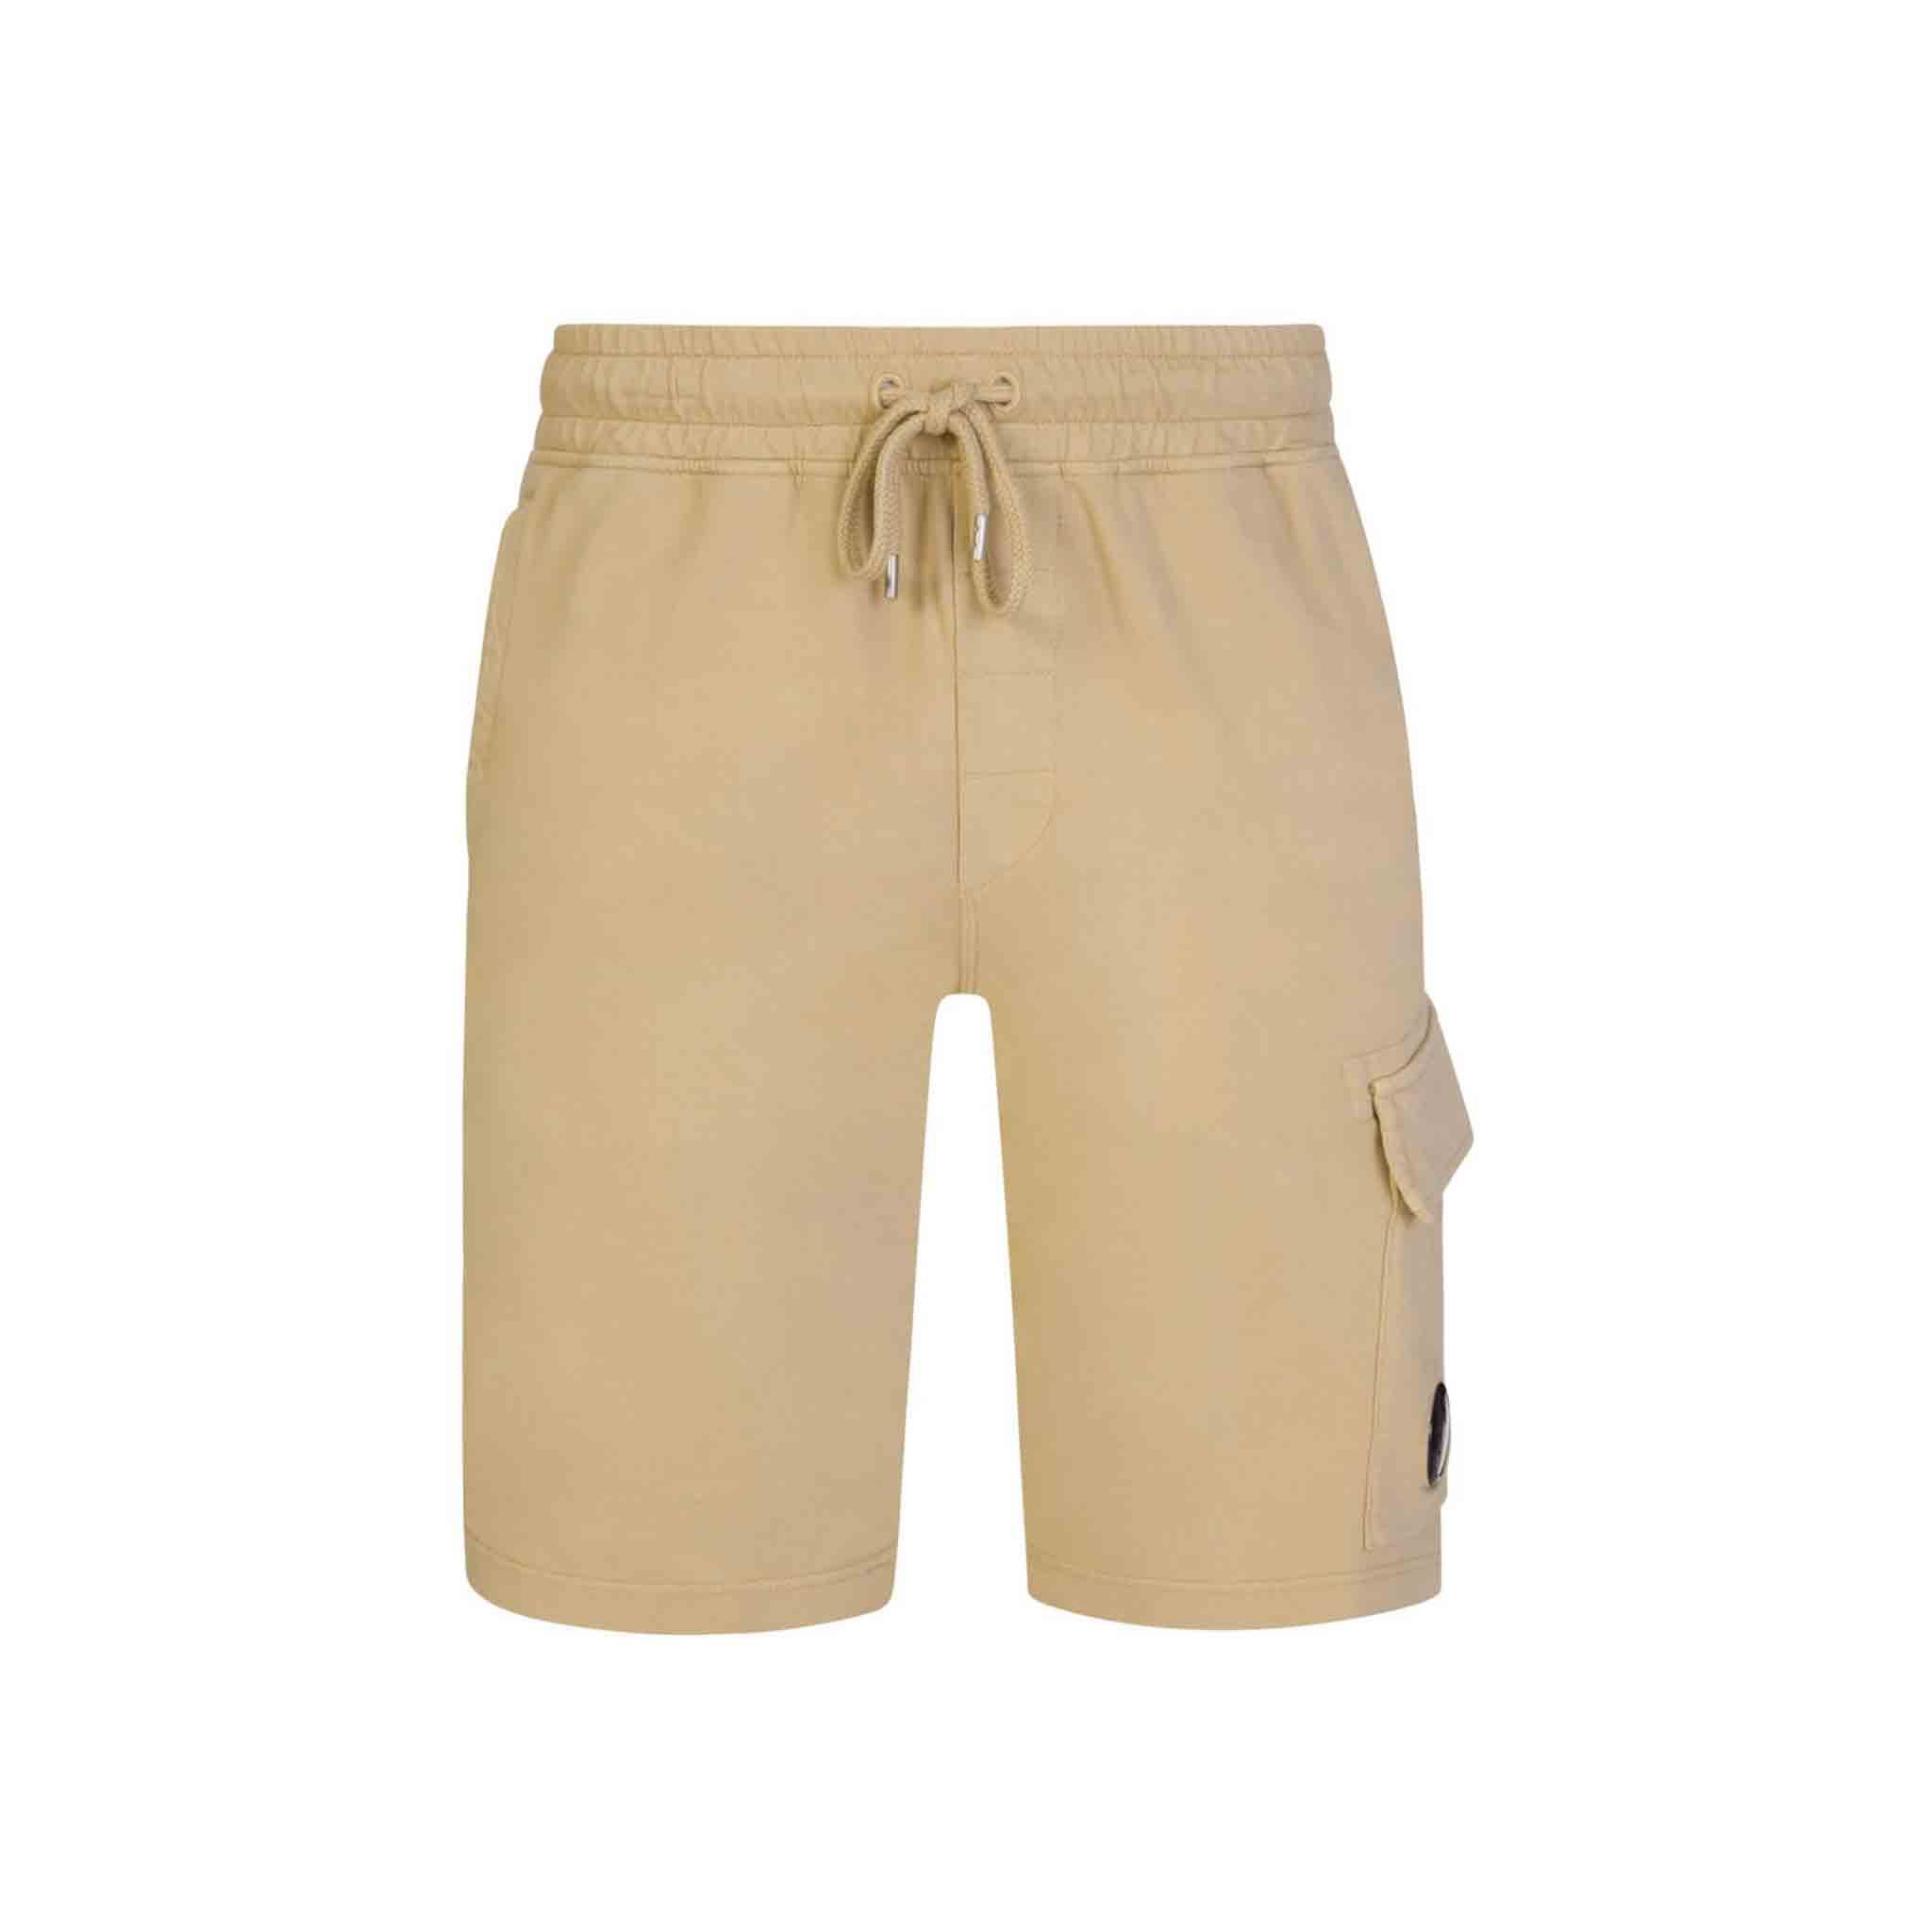 C.P. Company Light Fleece Shorts in Mojade Desert- Yellow